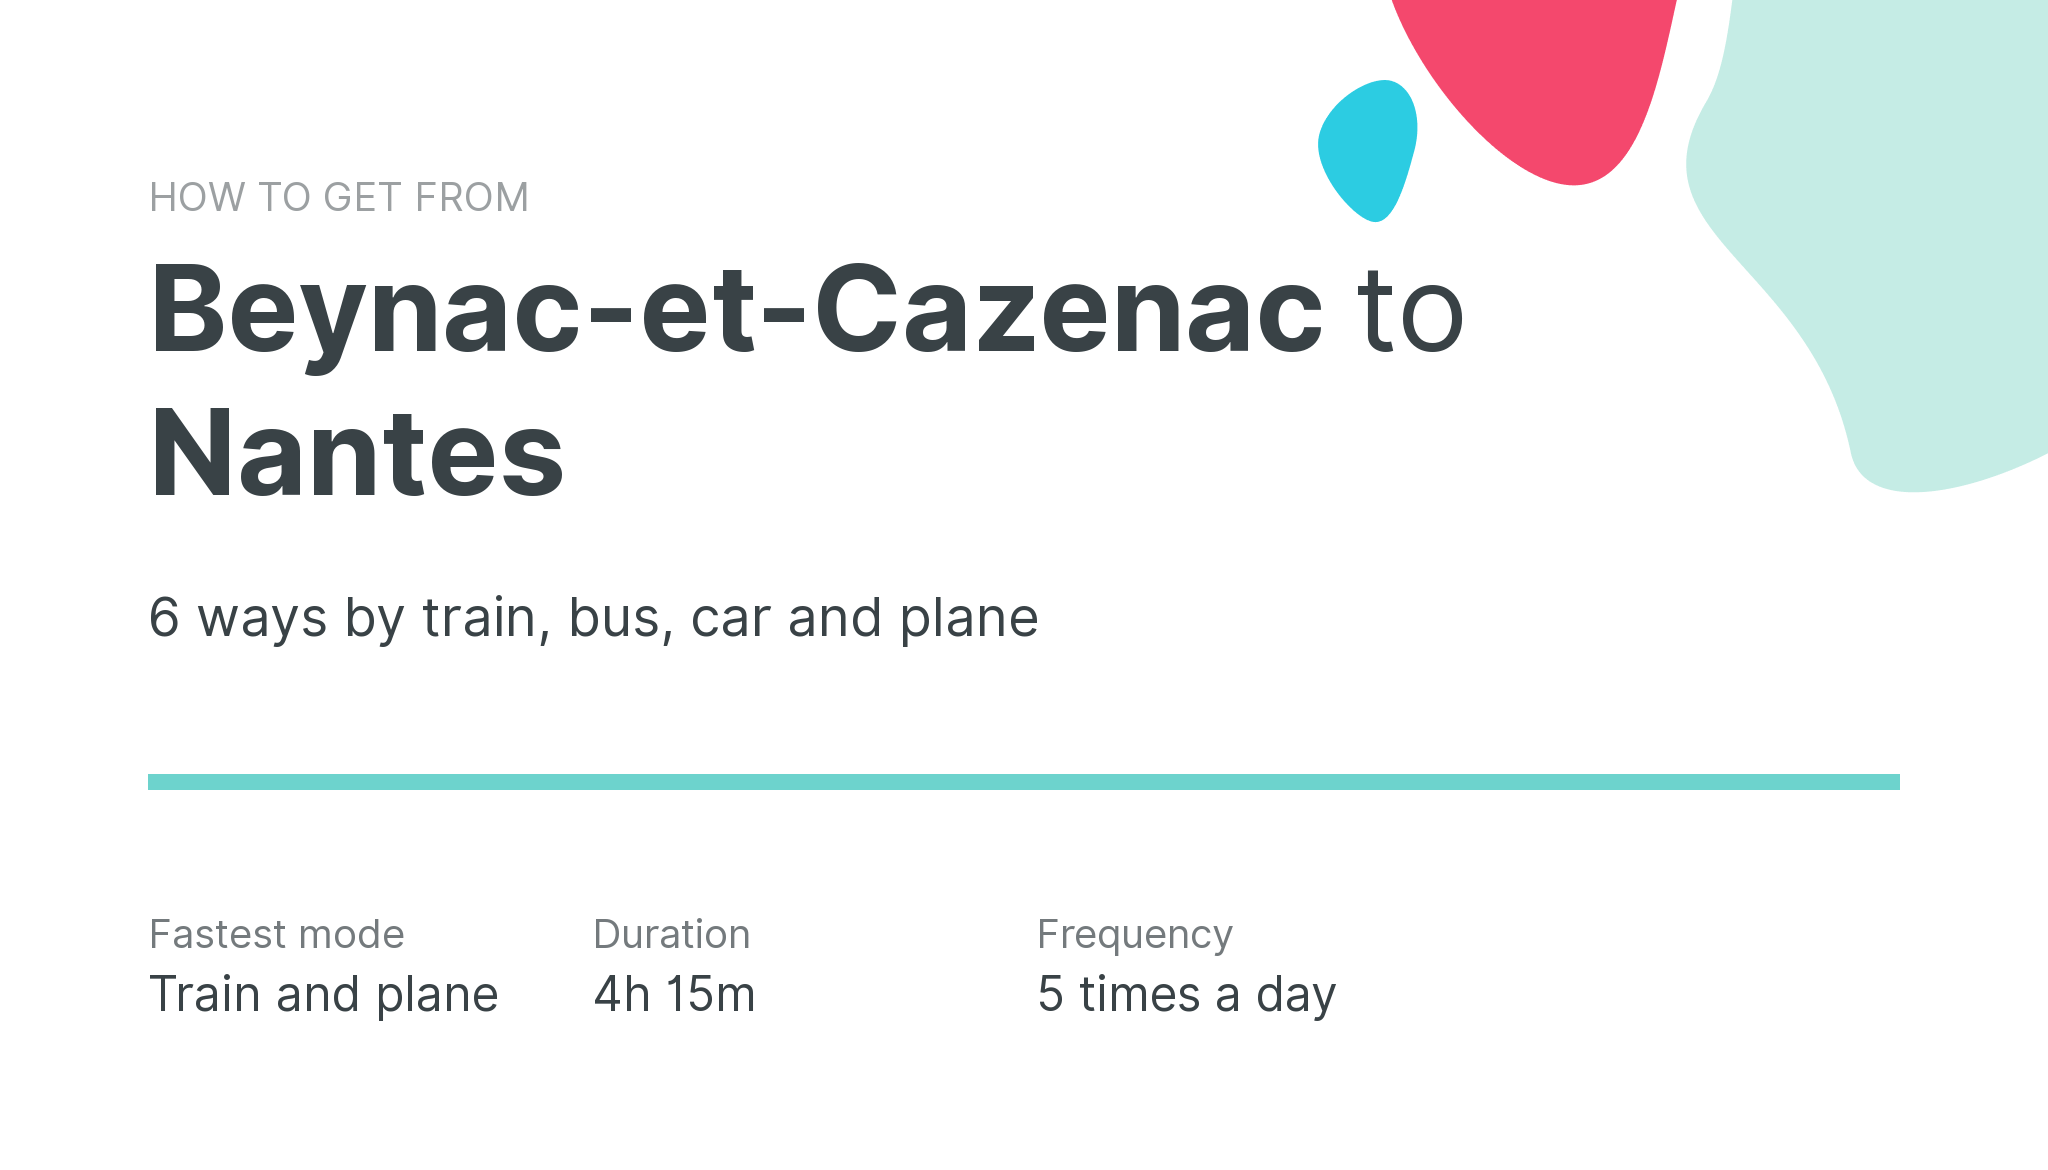 How do I get from Beynac-et-Cazenac to Nantes